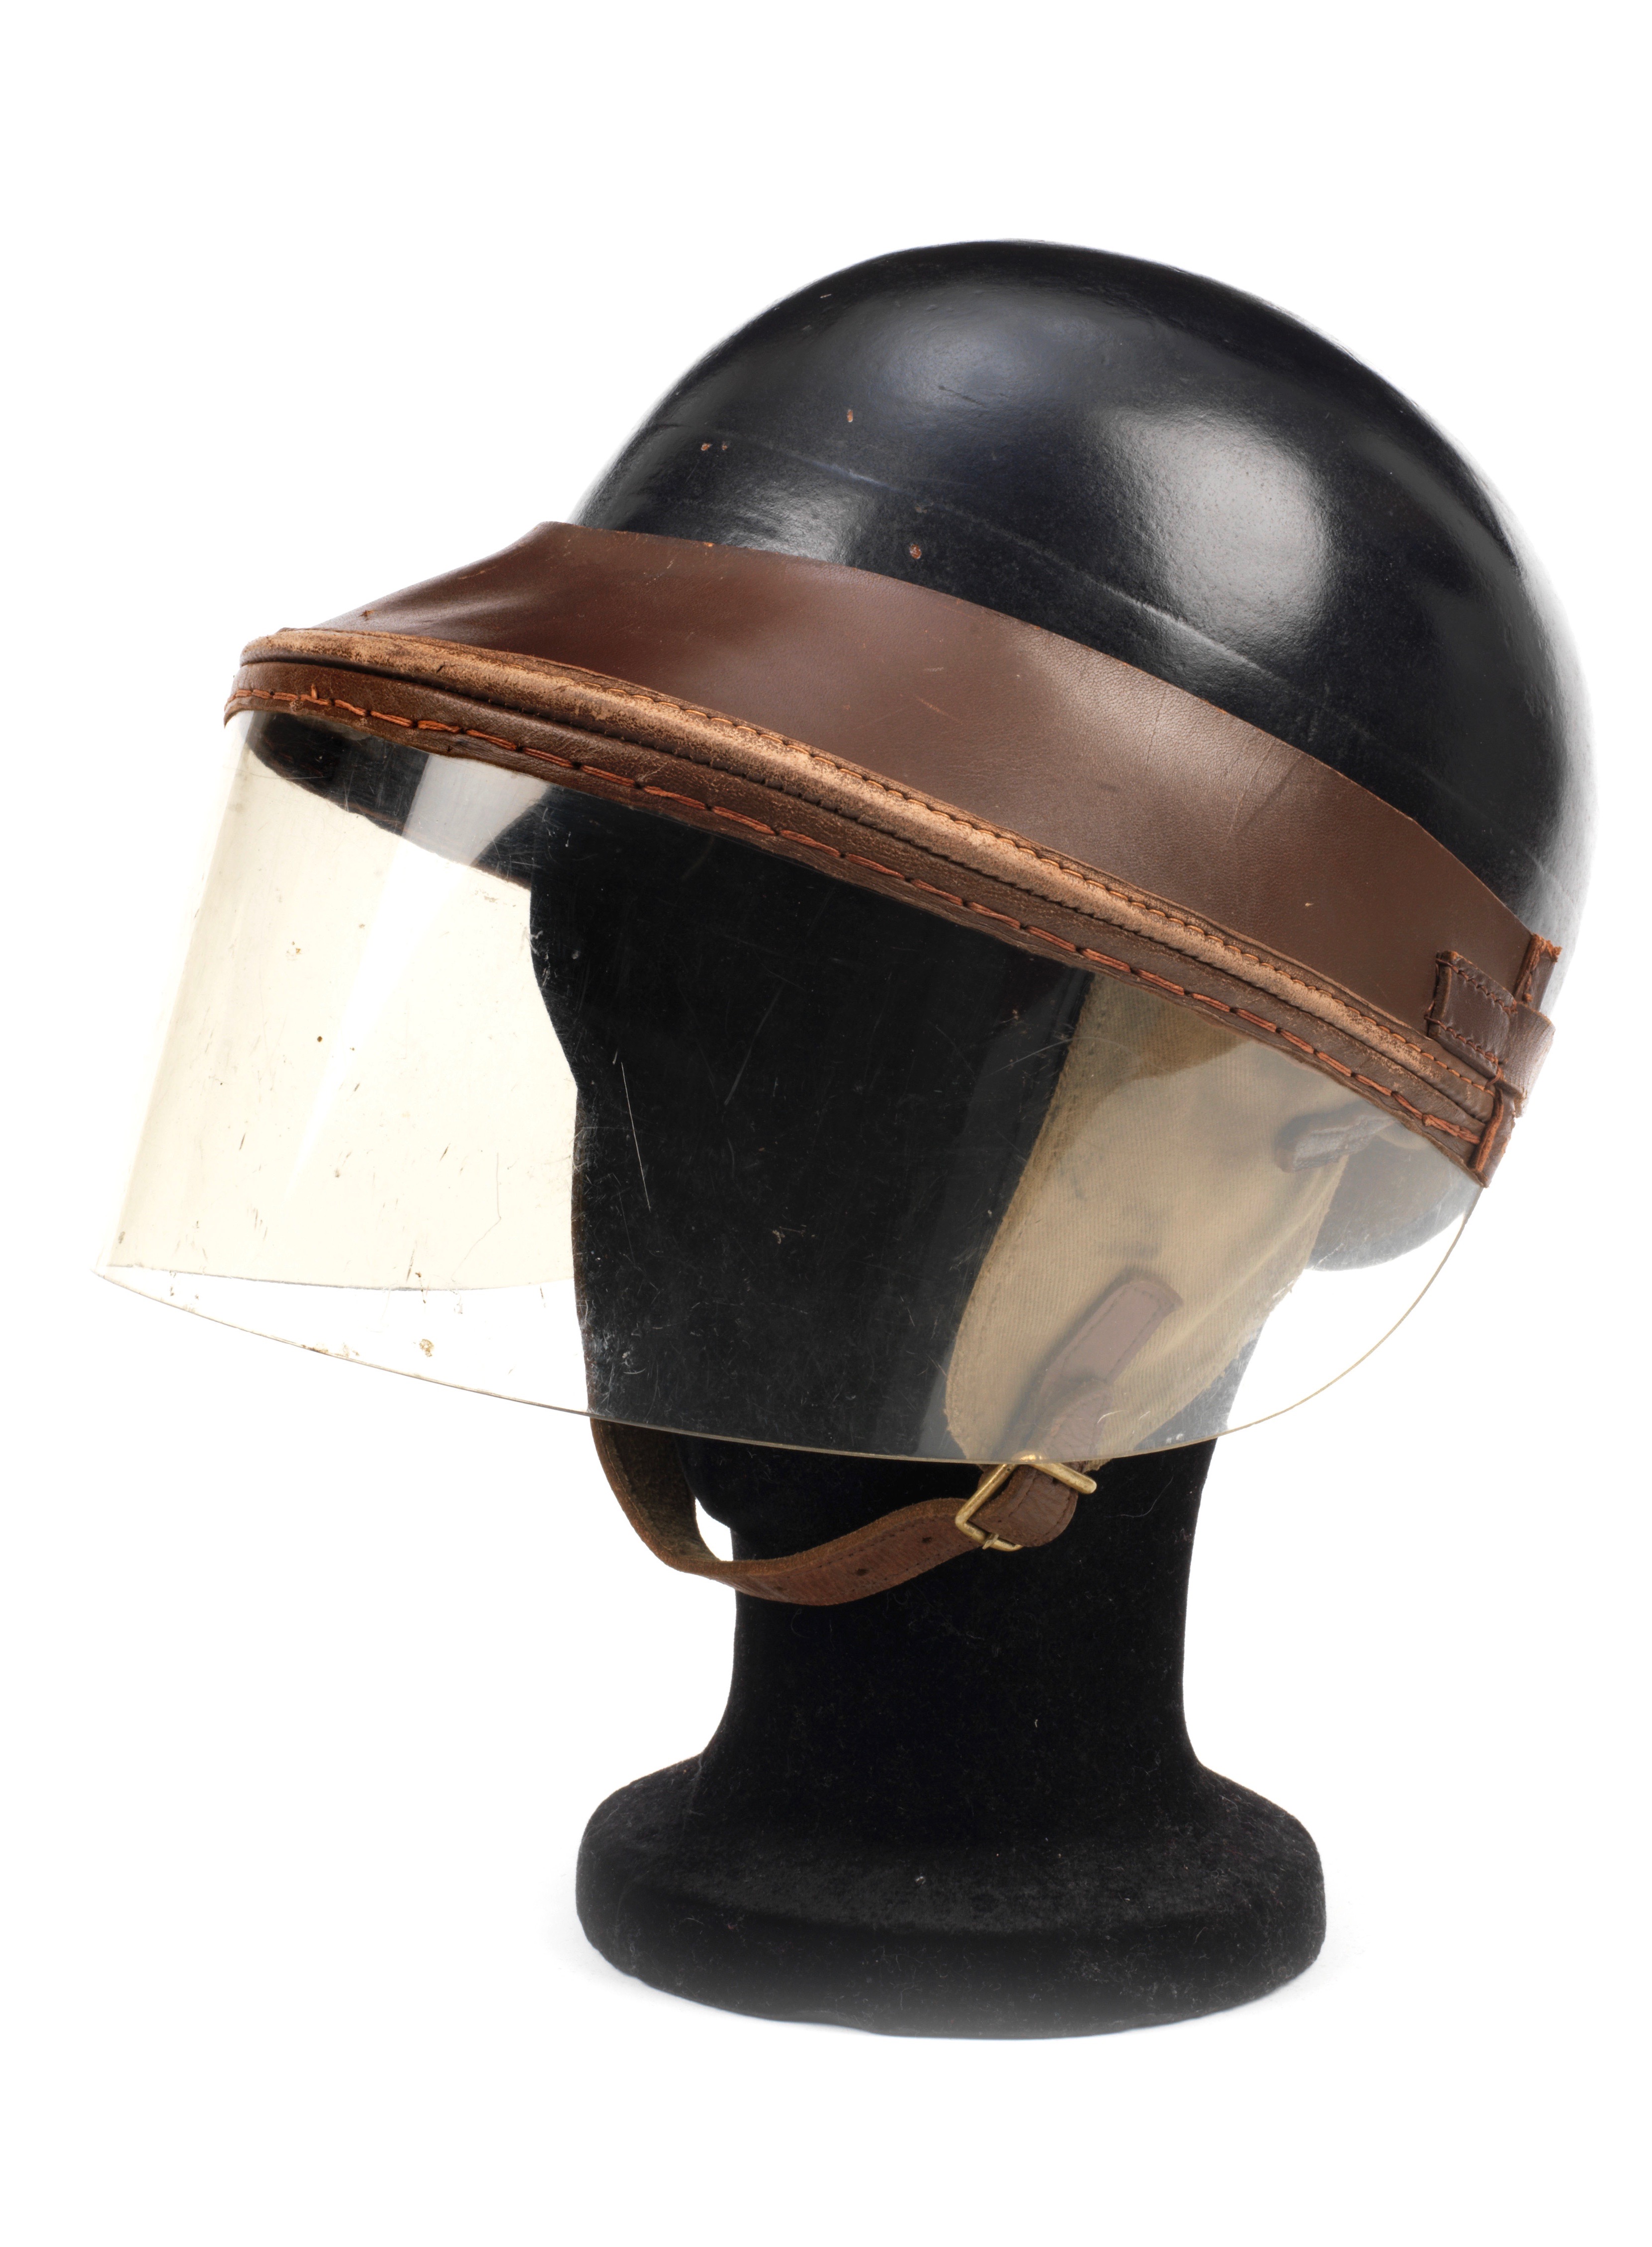 racing helmets, Champions’ helmets on Bonhams’ Goodwood docket, ClassicCars.com Journal